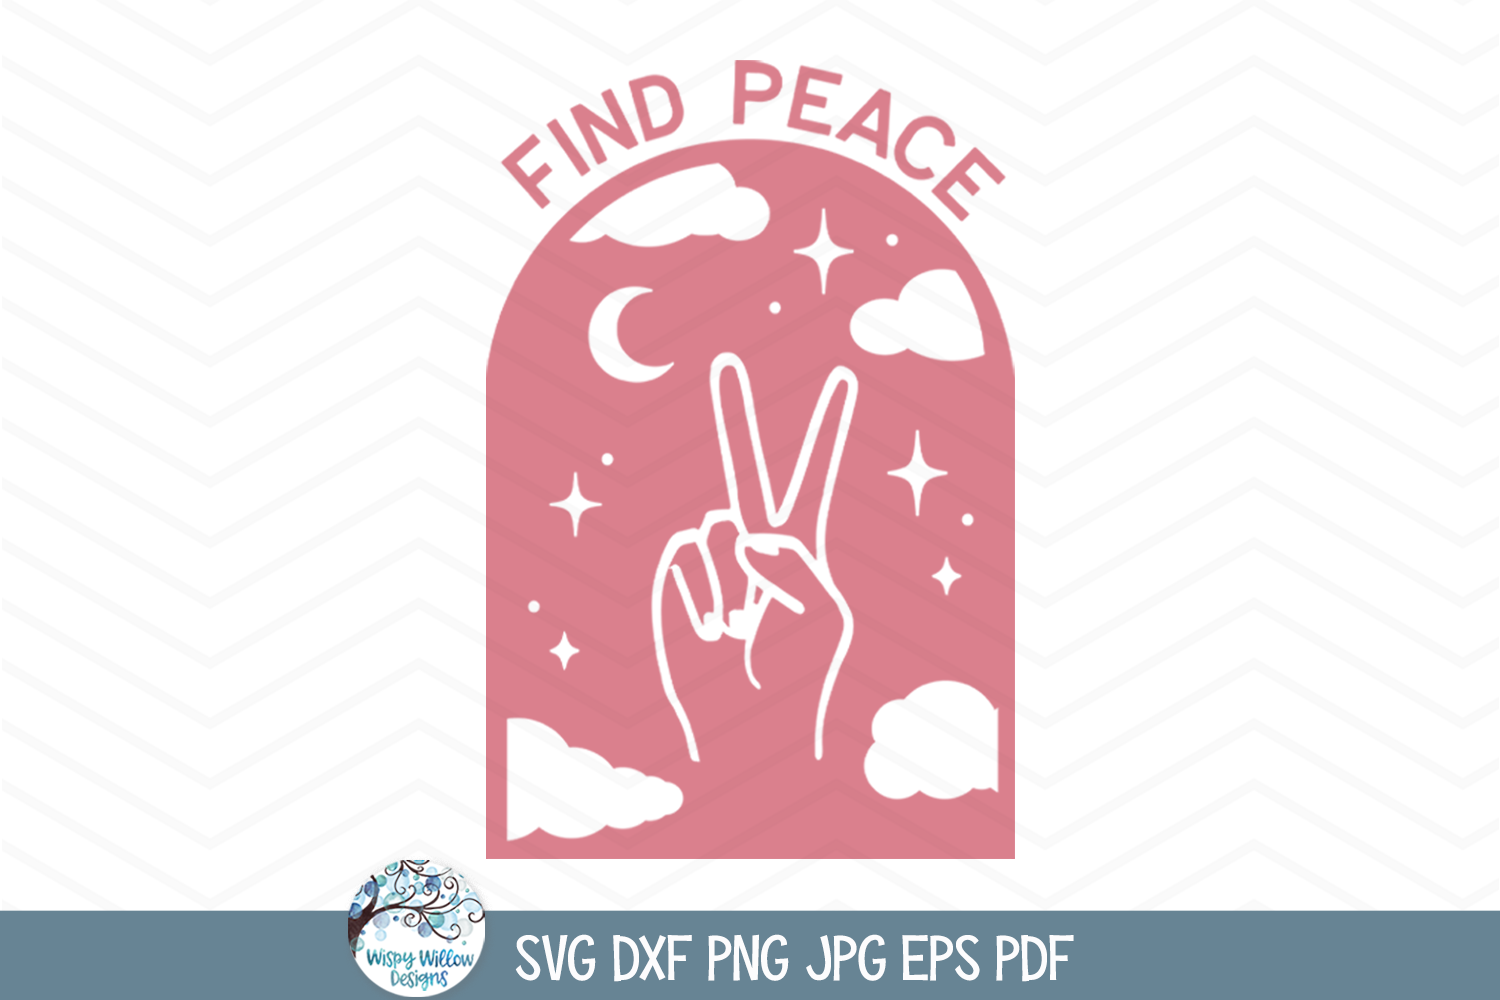 Find Peace SVG | Calming Hand Gesture Design